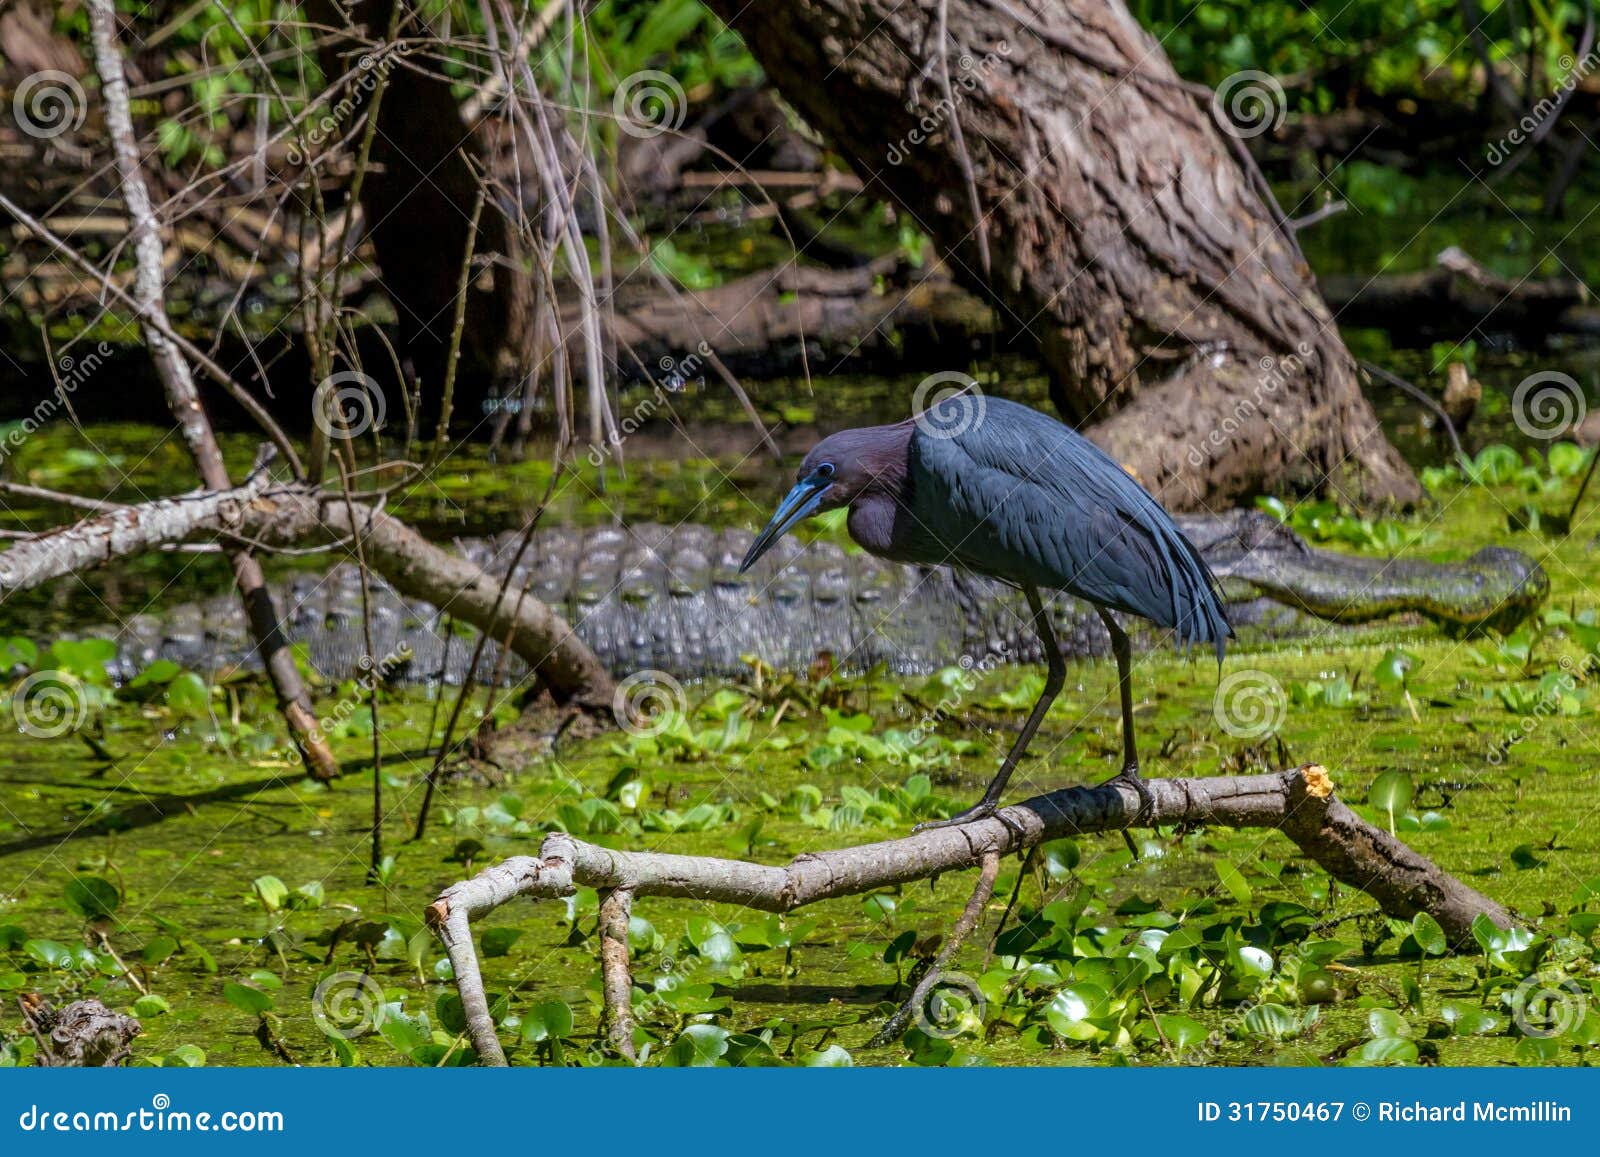 profile shot of a little blue heron (egretta caerulea) in front of a giant wild alligator in texas.